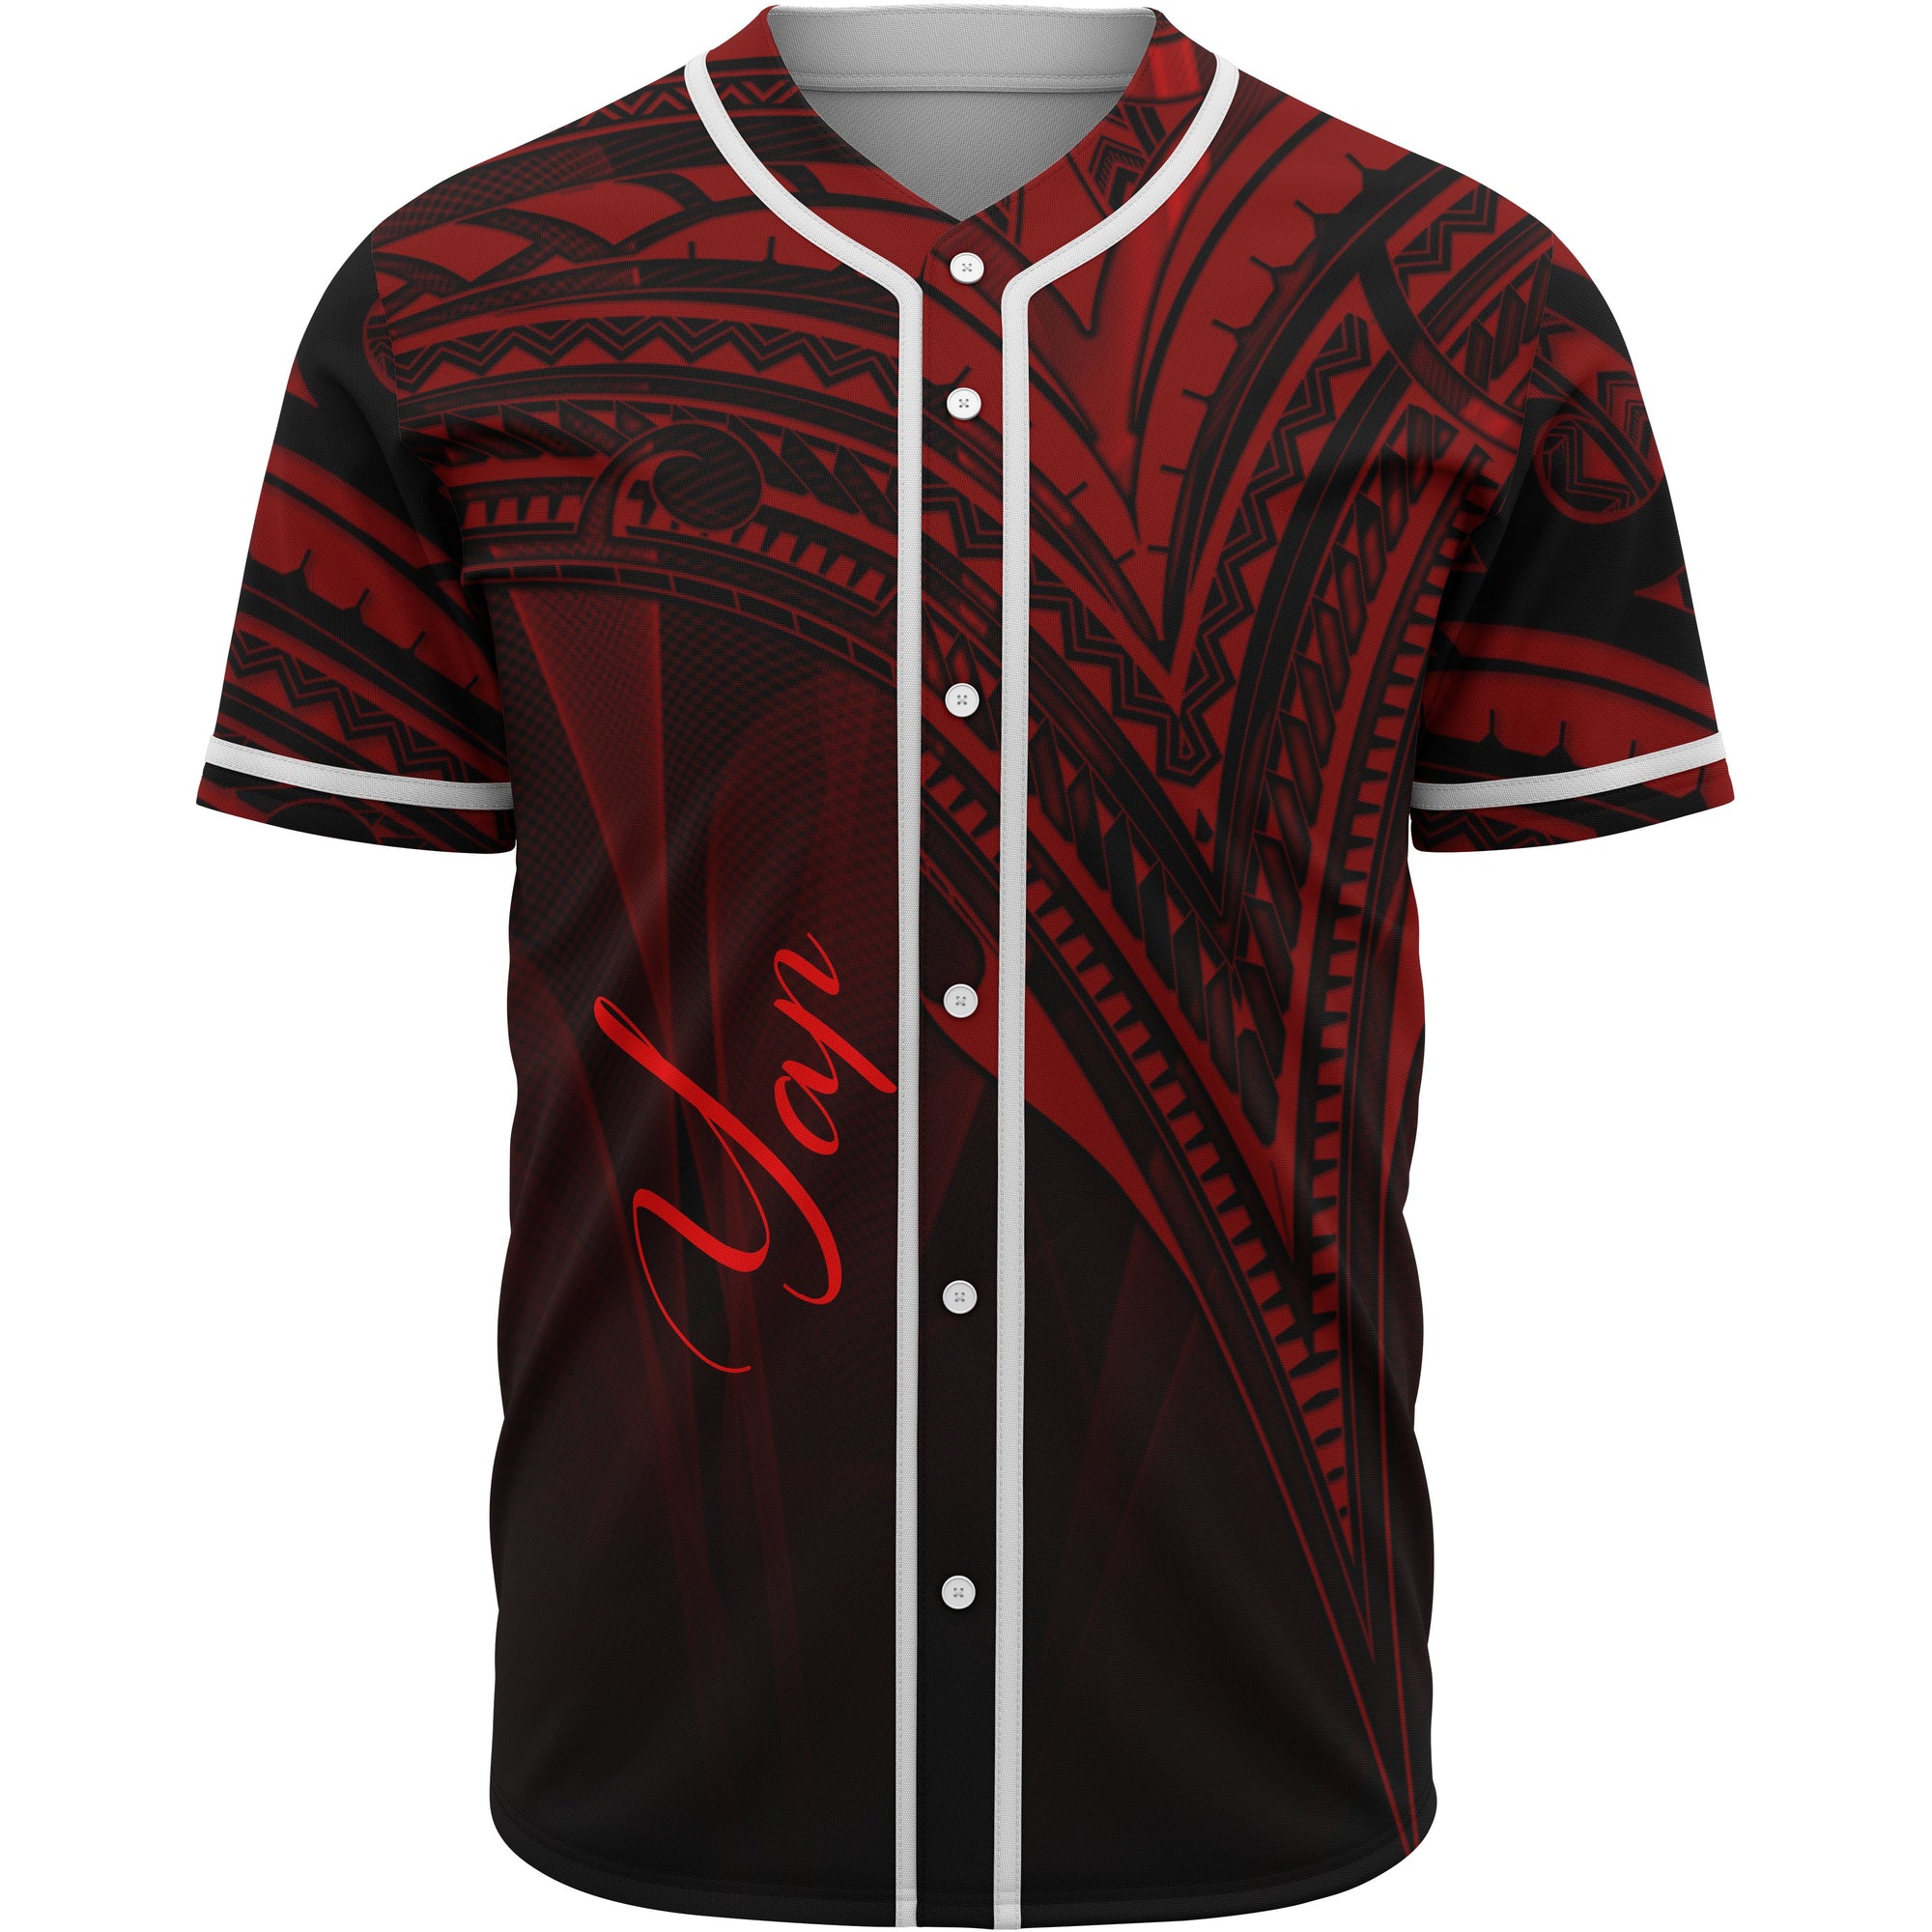 Yap State Baseball Shirt - Red Color Cross Style Unisex Black - Polynesian Pride